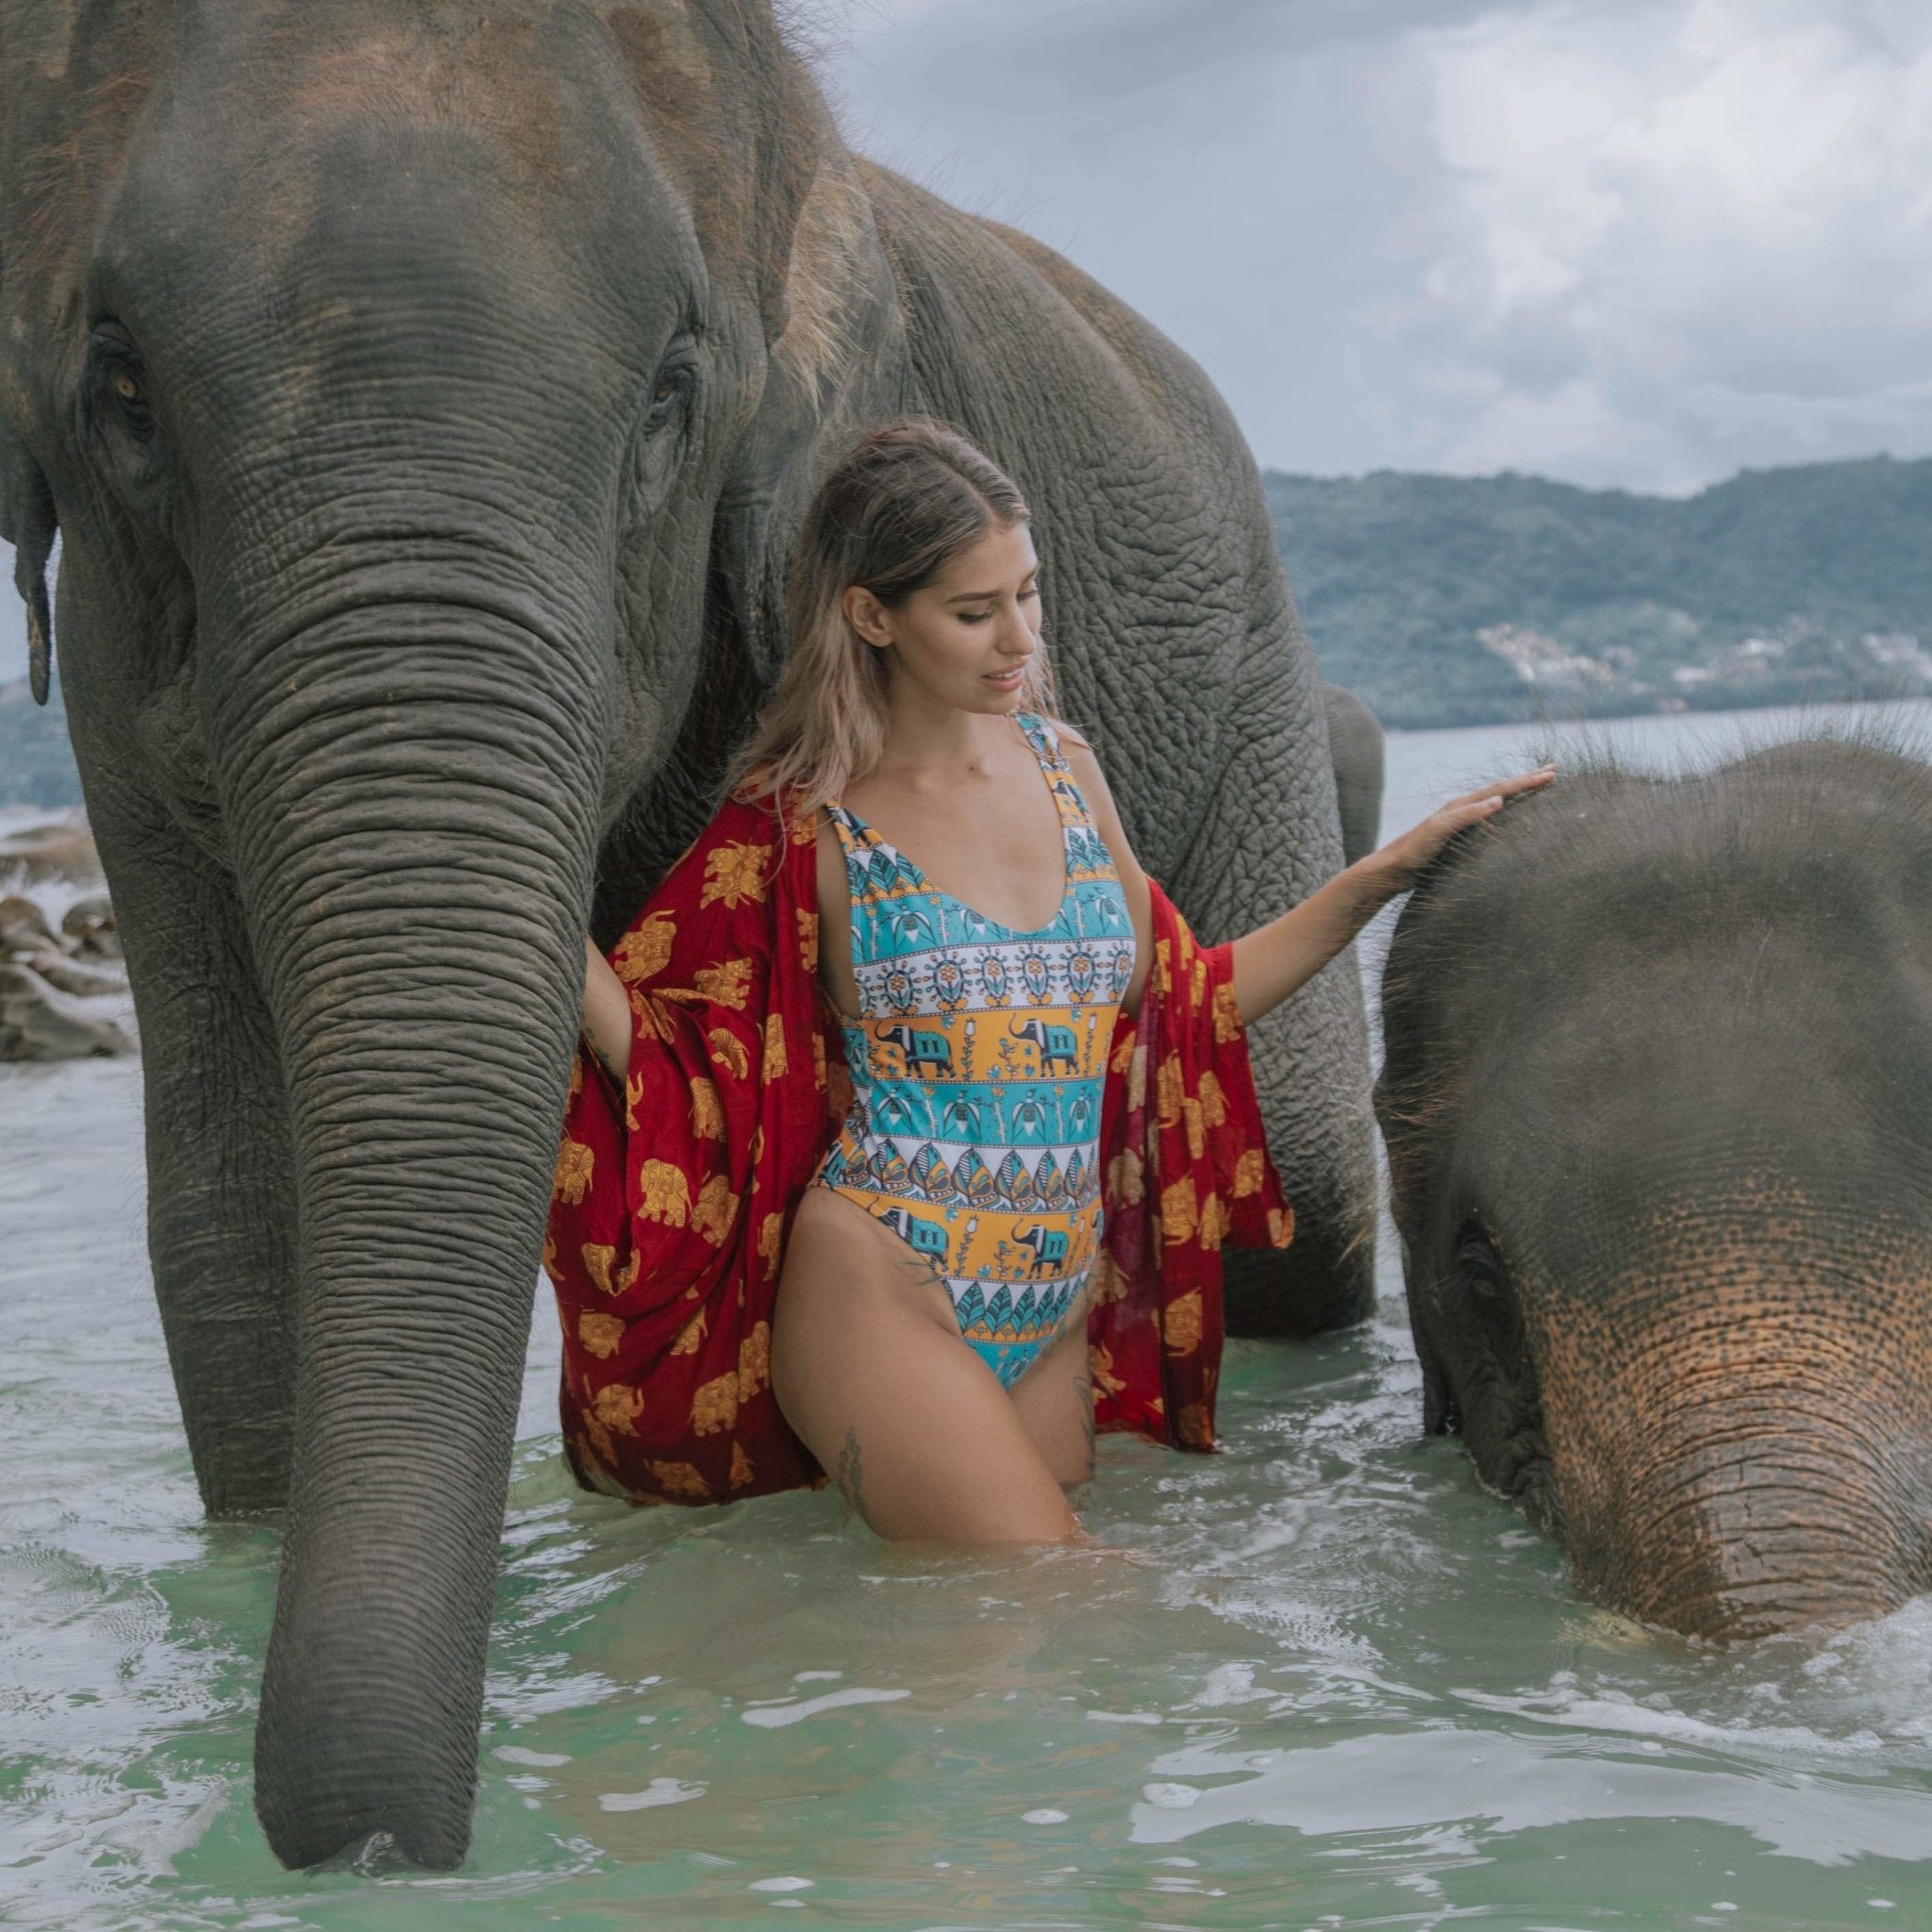 BALI BIKINI Elepanta Swimsuits - Buy Today Elephant Pants Jewelry And Bohemian Clothes Handmade In Thailand Help To Save The Elephants FairTrade And Vegan